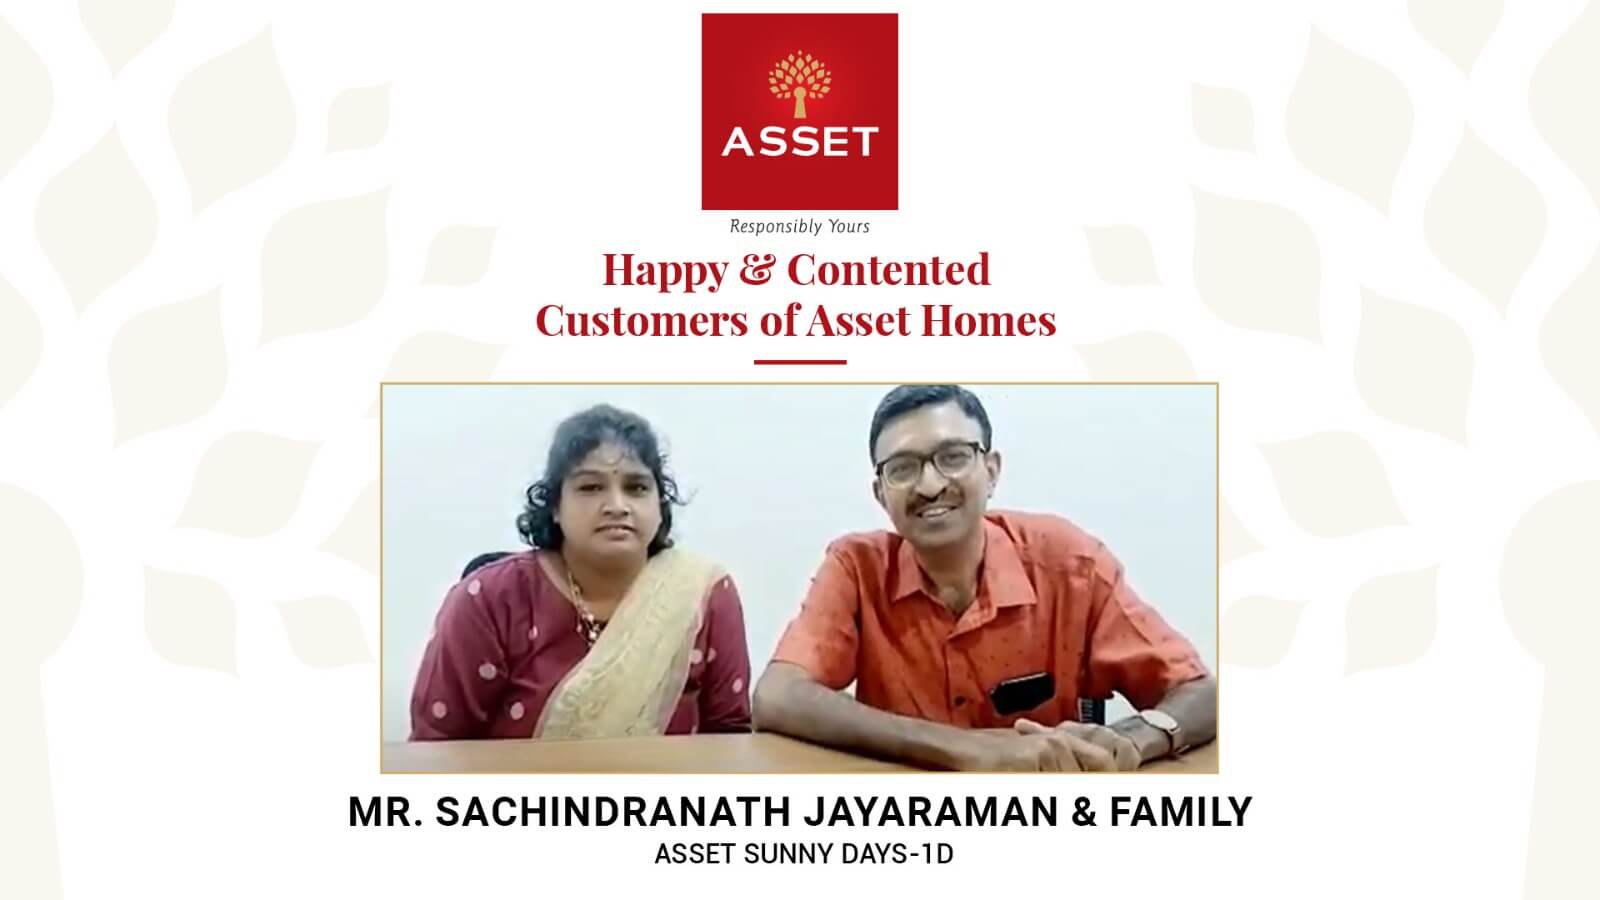 Mr. Sachindranath Jayaraman & Family, Asset Sunny Days-1D